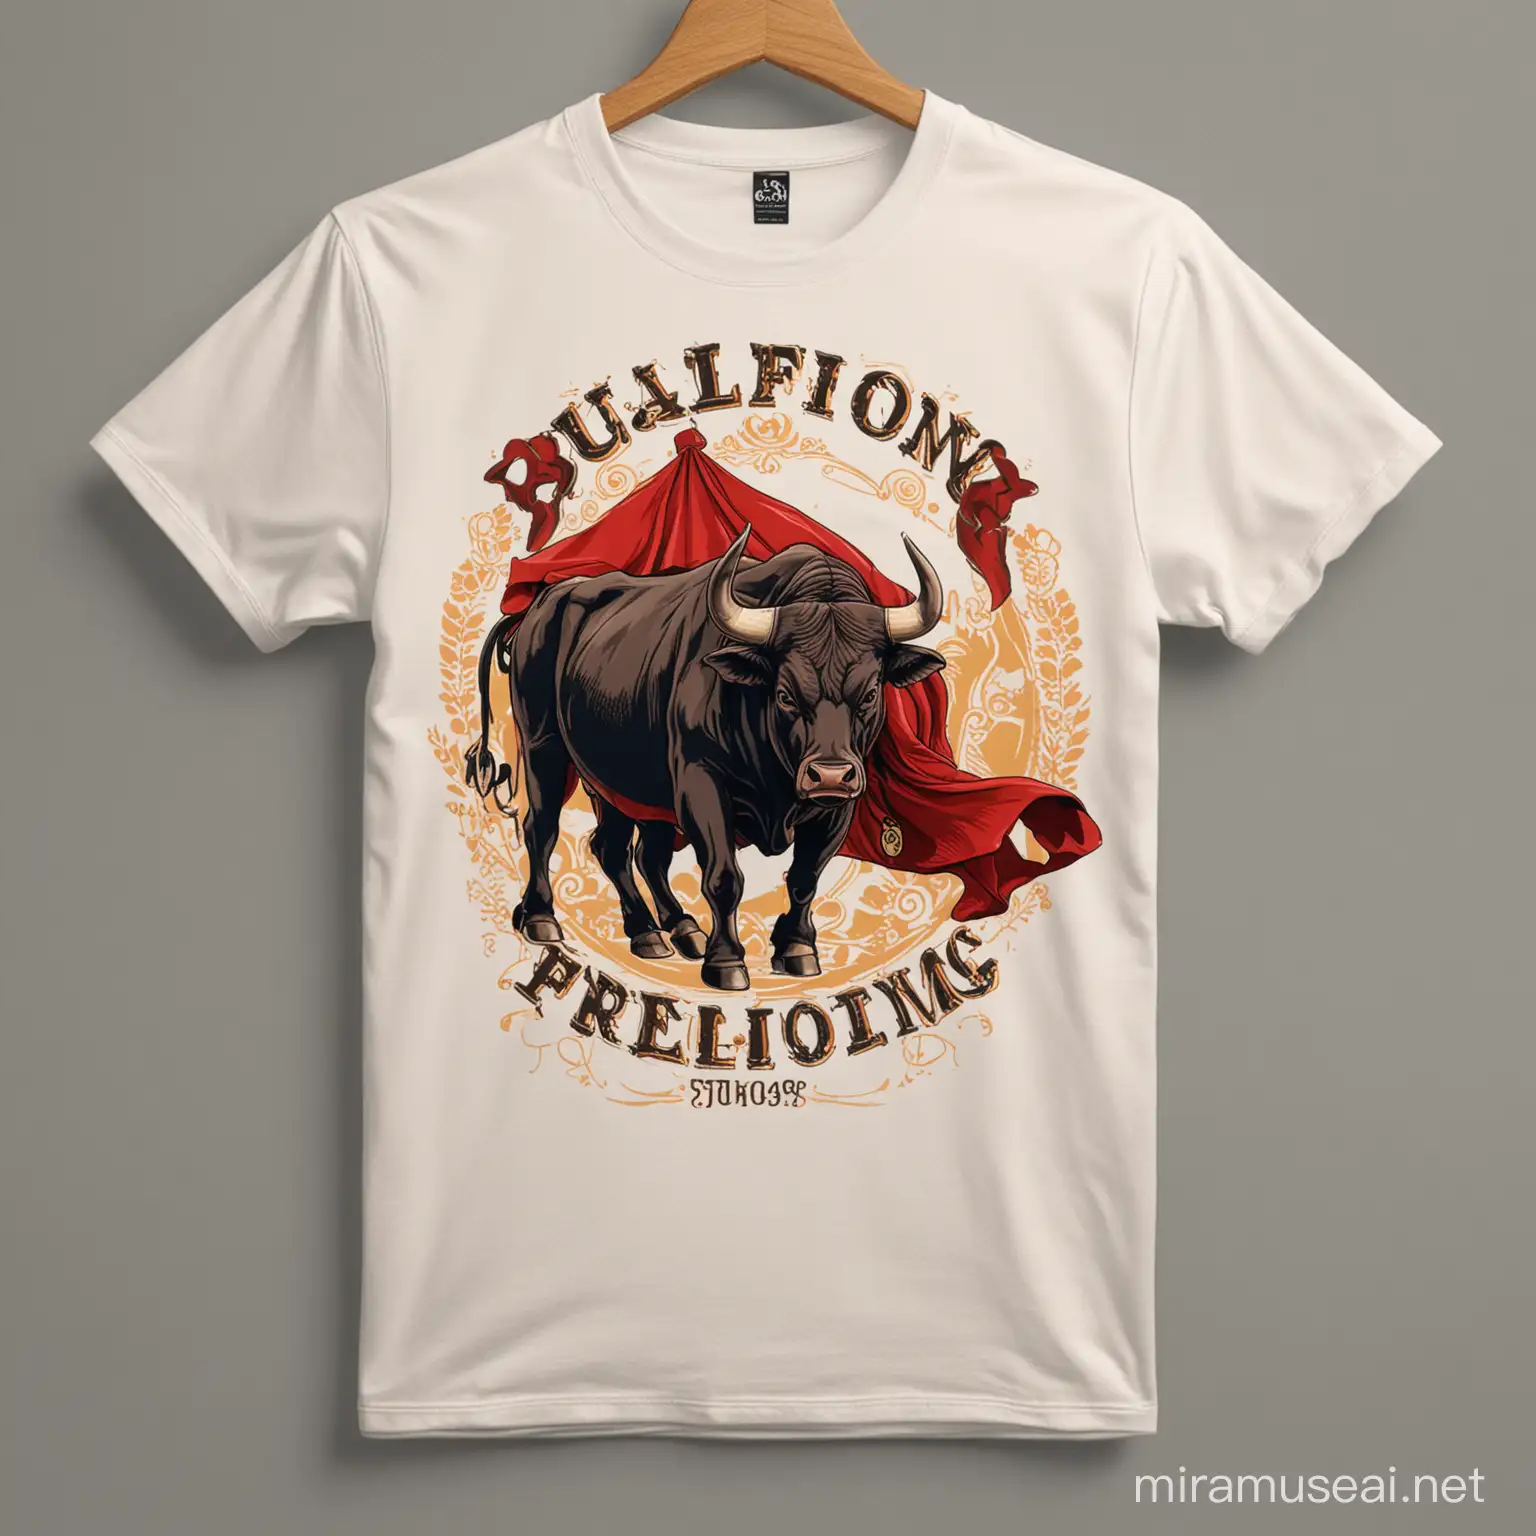 Bullfighting club T-shirt designs 